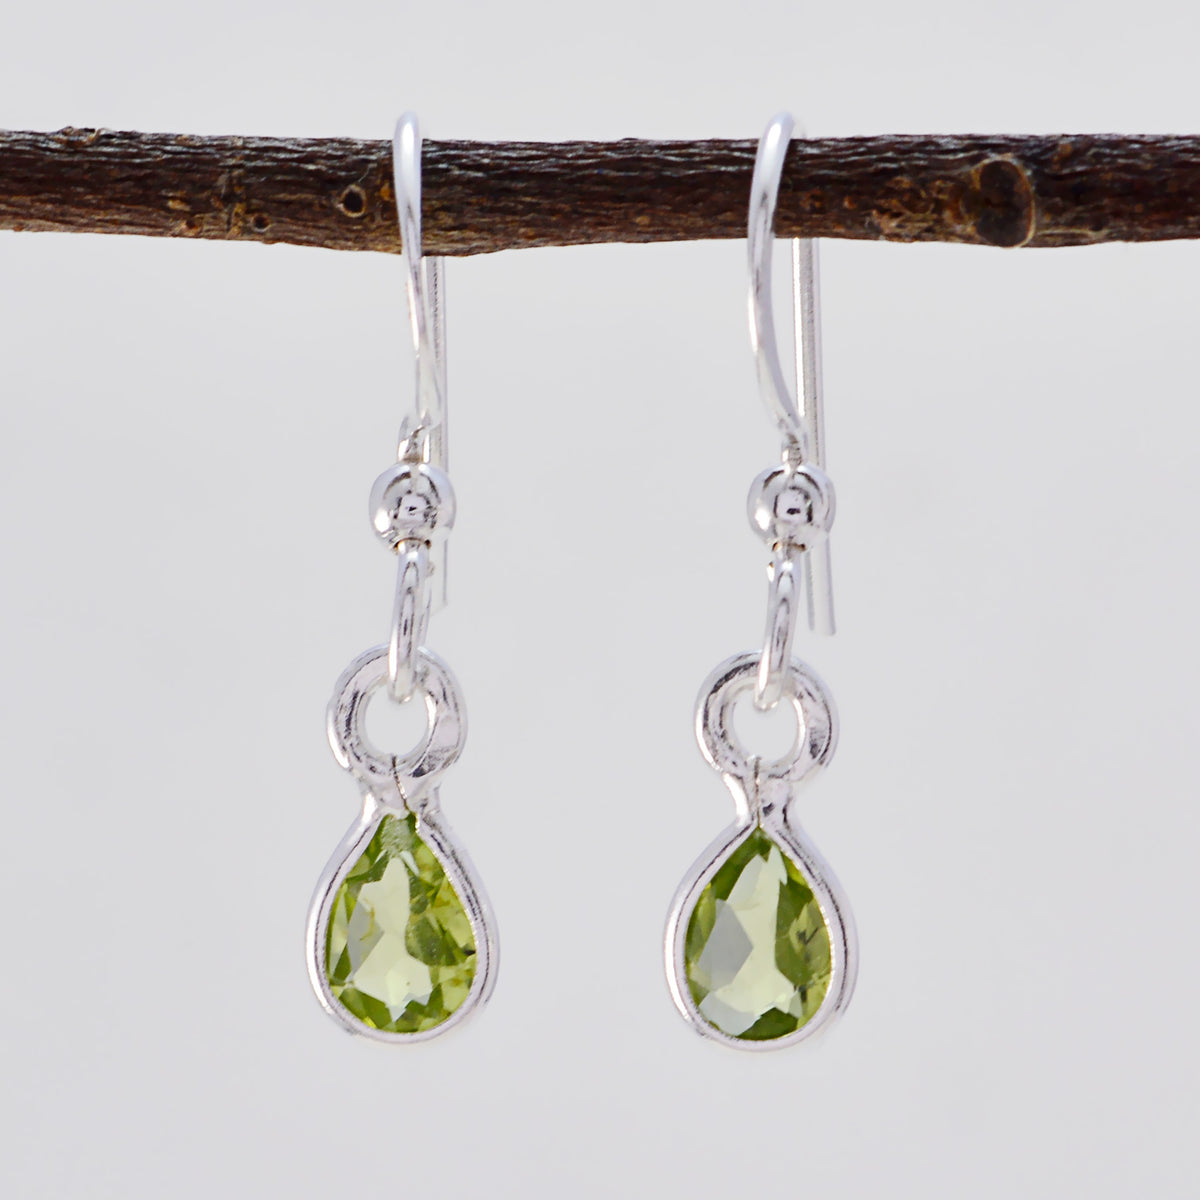 Riyo Genuine Gems pear Faceted Green Peridot Silver Earrings thanks giving gift